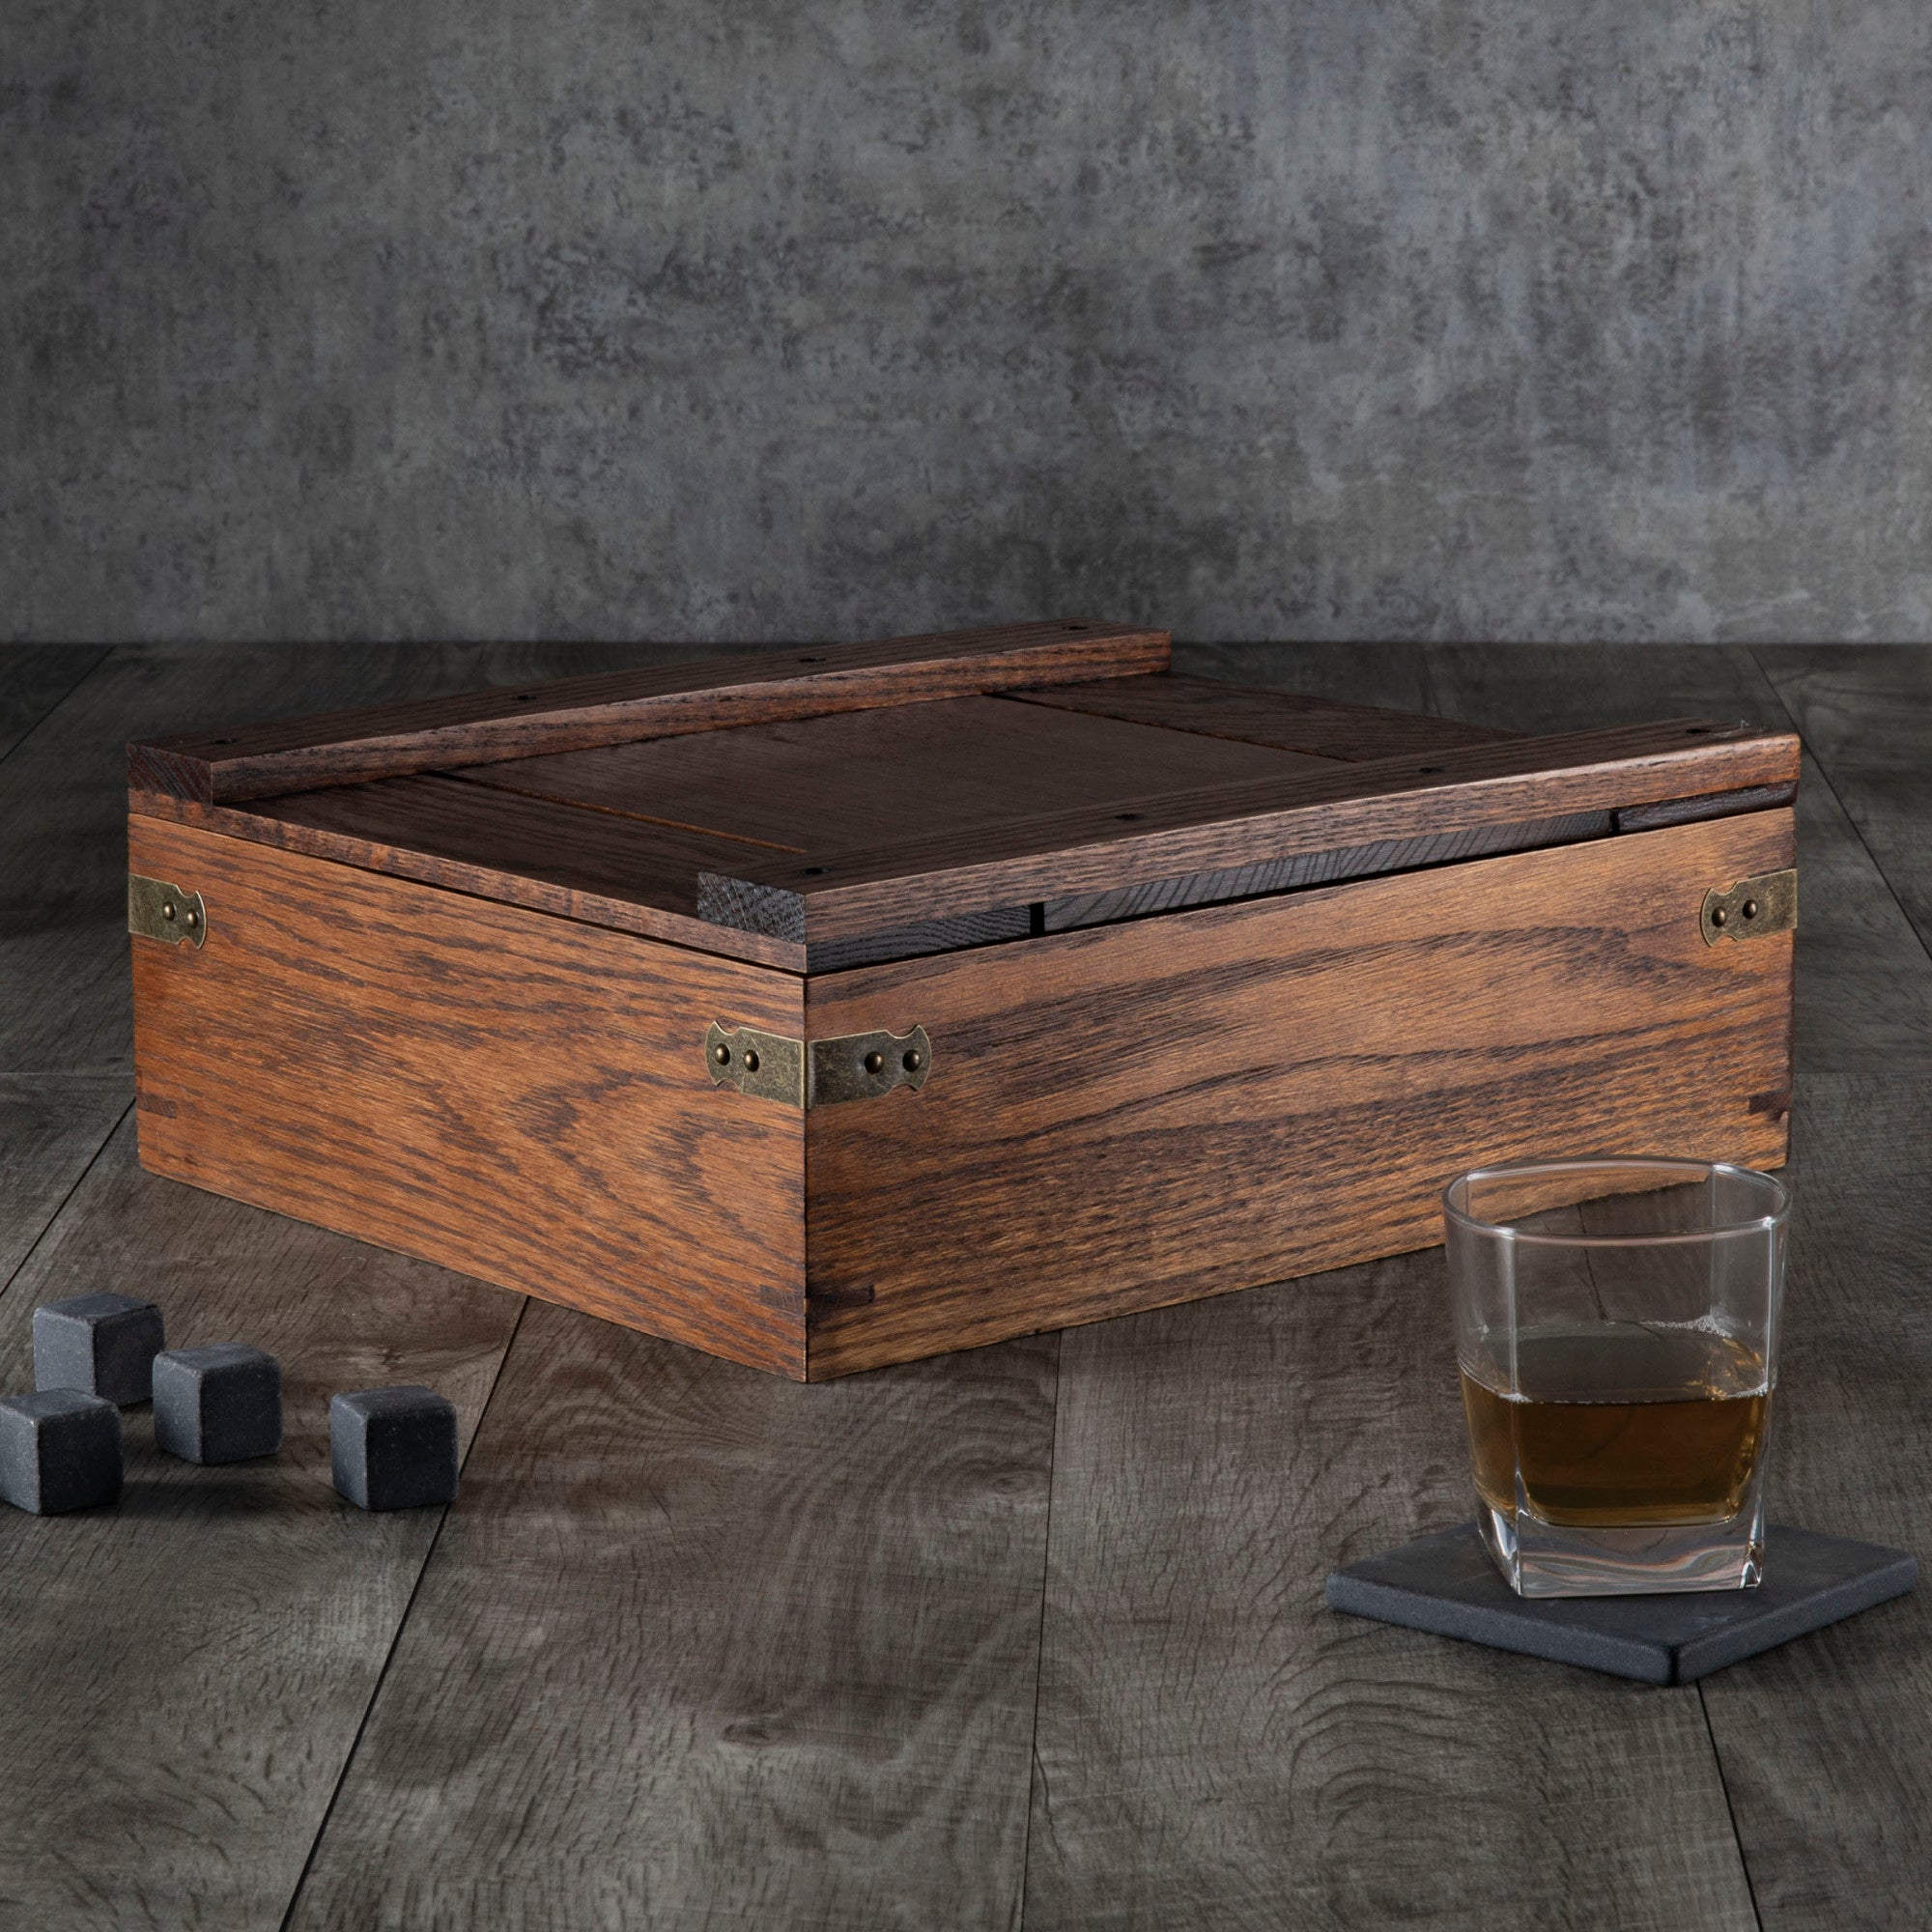 Boston Bruins - Whiskey Box Gift Set